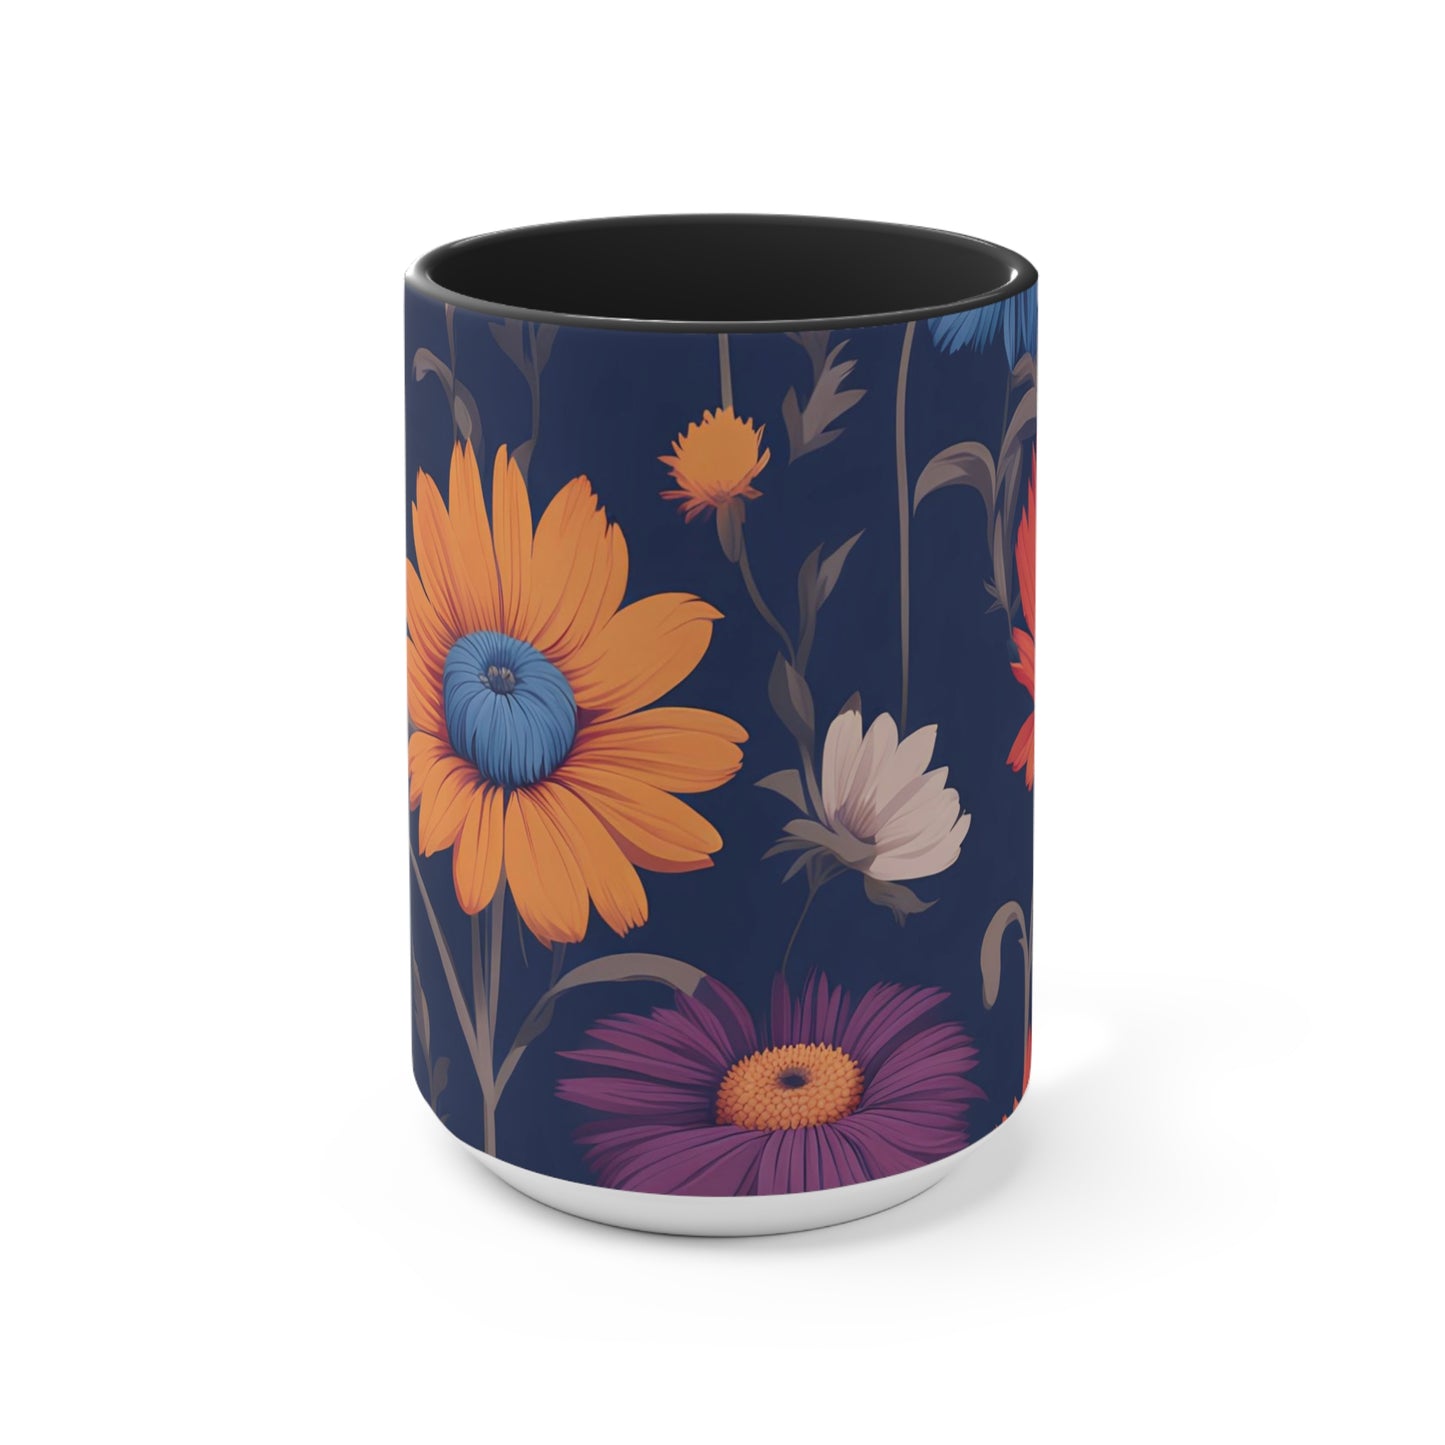 Fun Wildflowers, Ceramic Mug - Perfect for Coffee, Tea, and More!